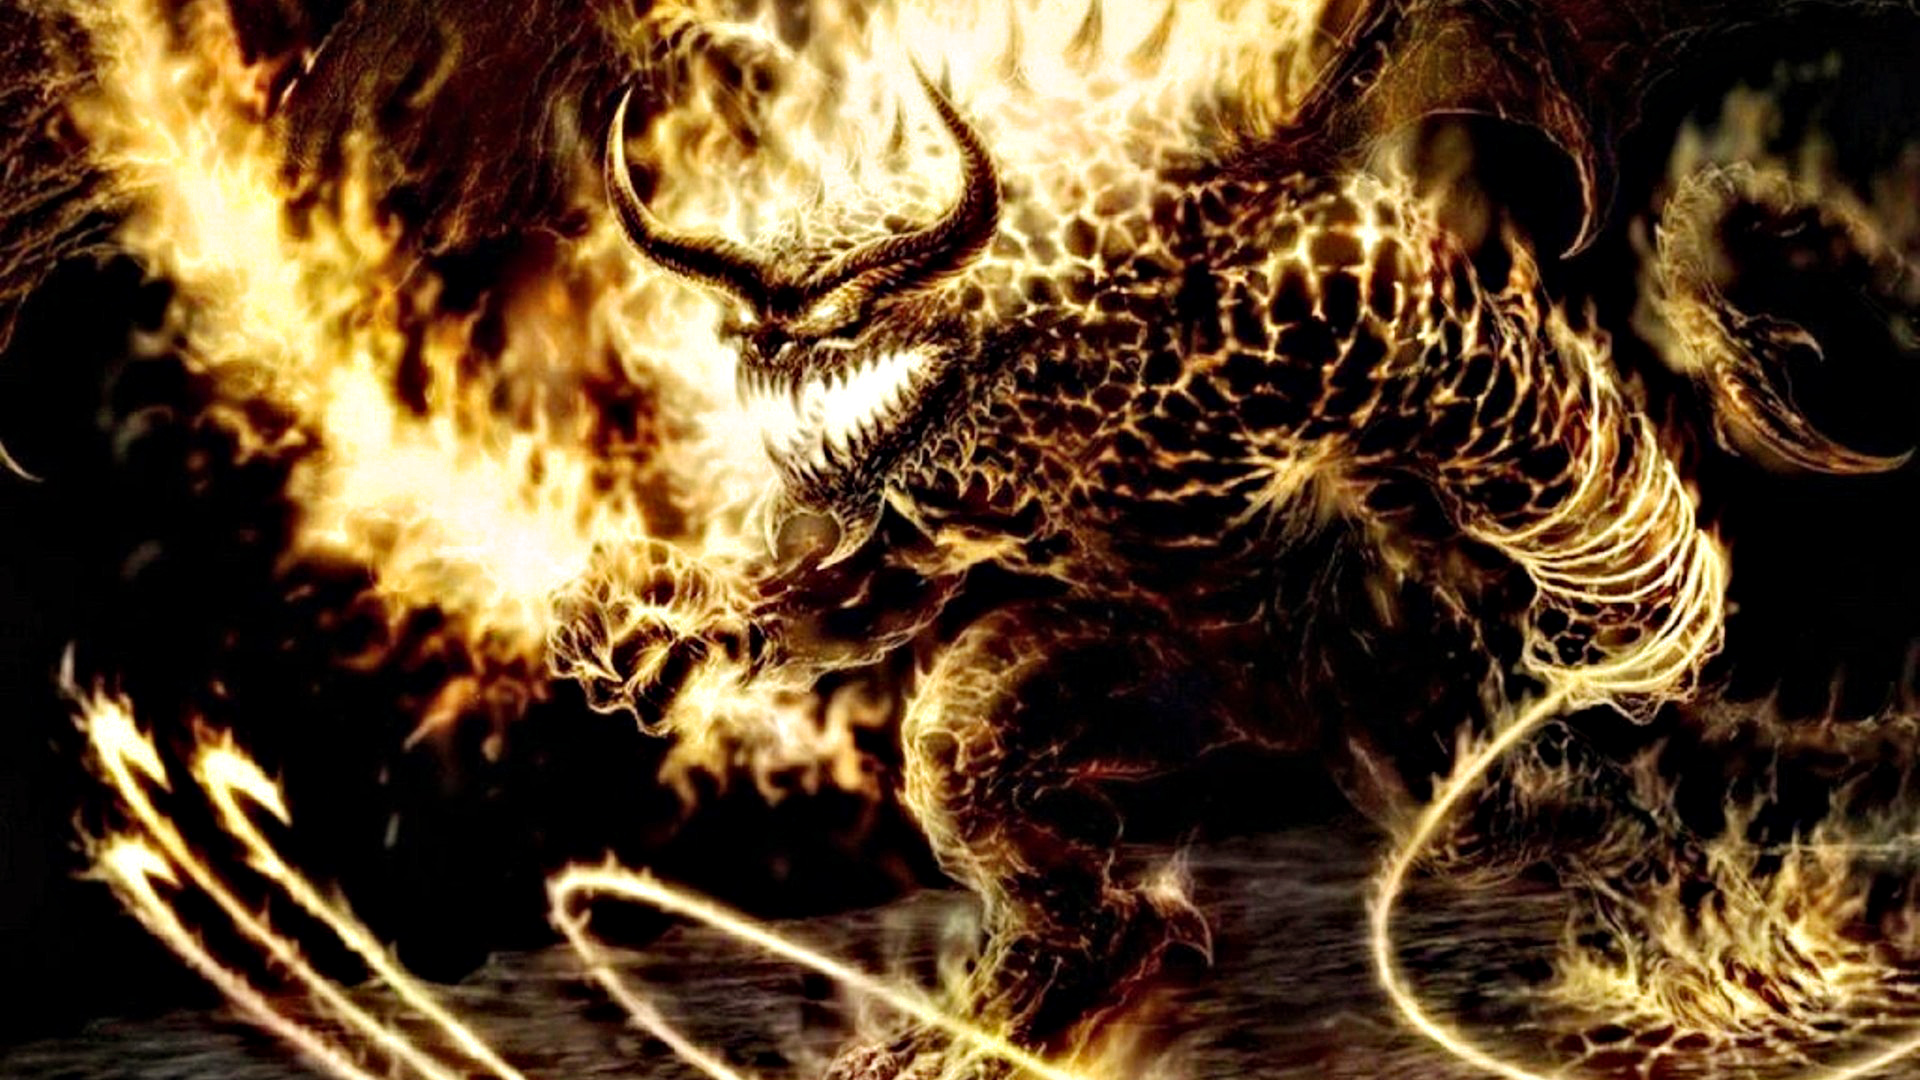 Bull Devil Demon of Hell Wallpaper HD 3219 Wallpaper with 1920x1080